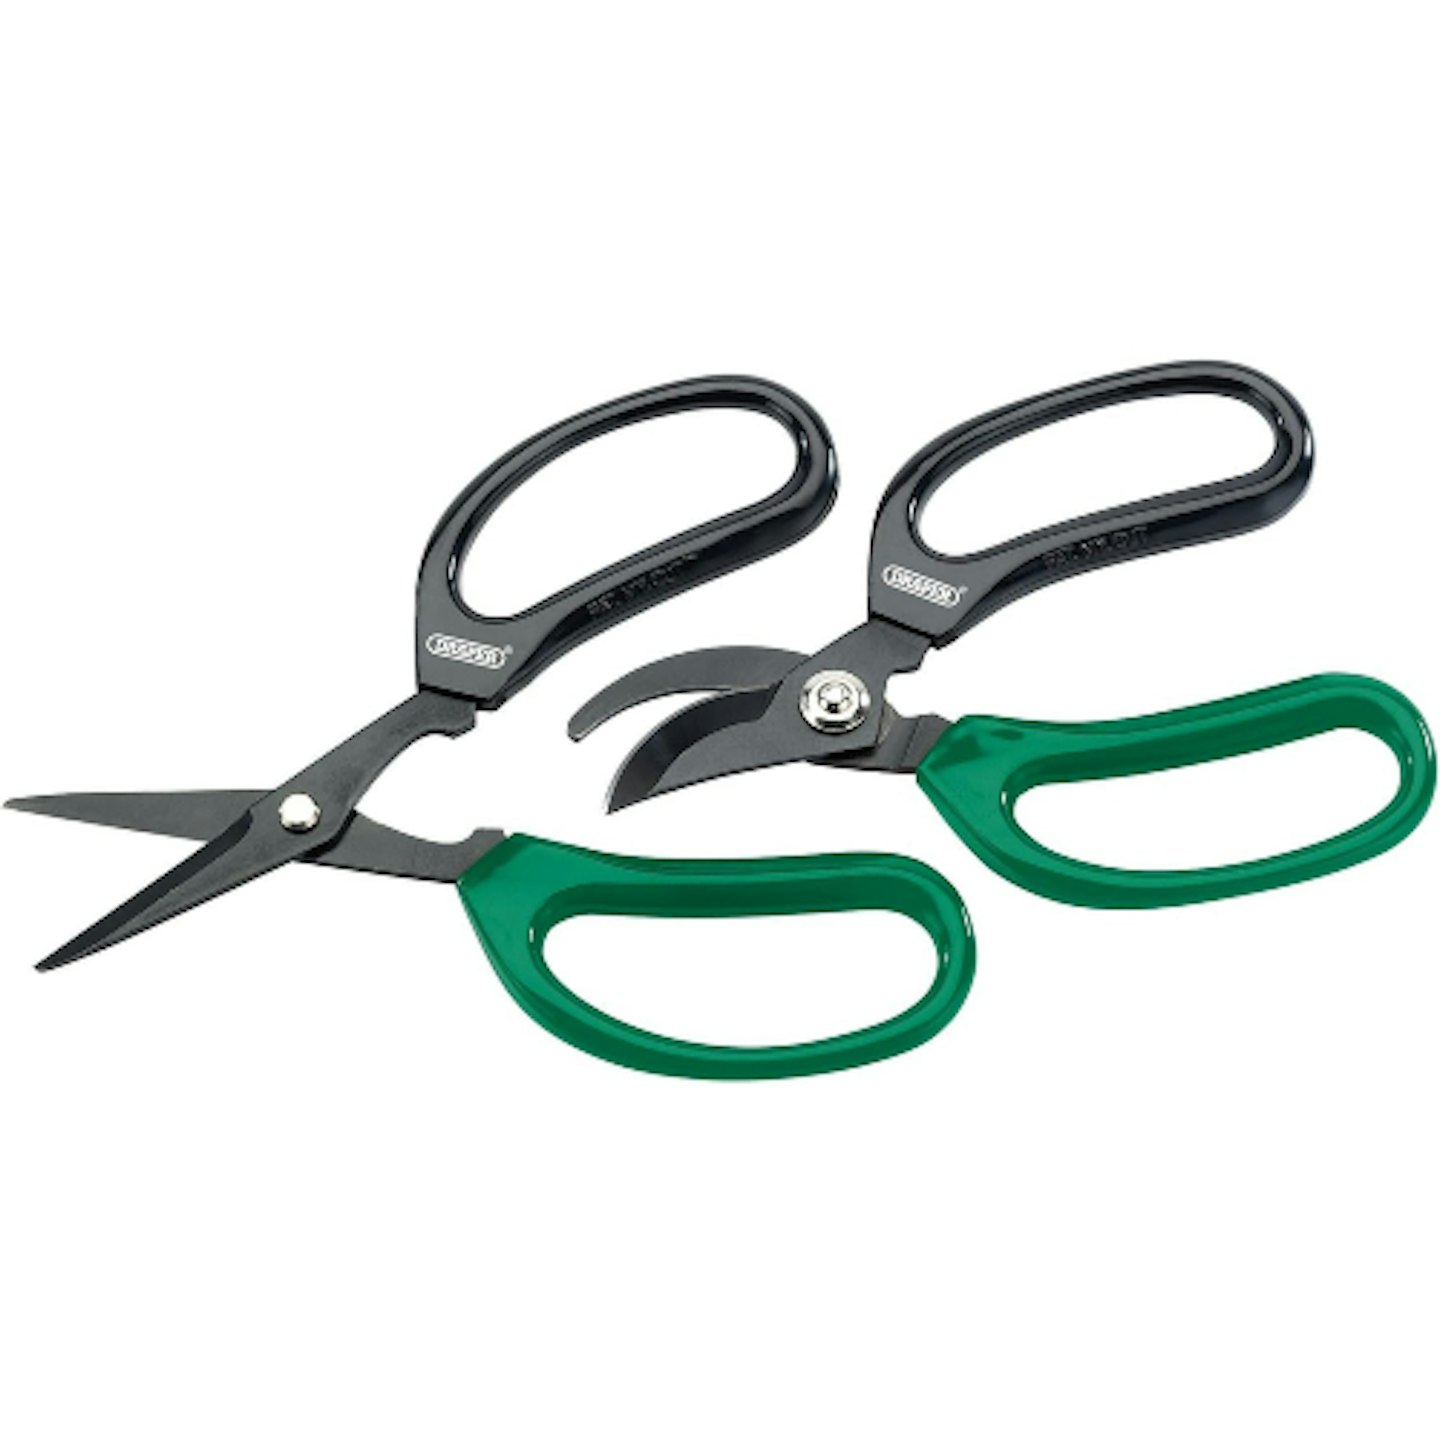 Draper garden scissors 